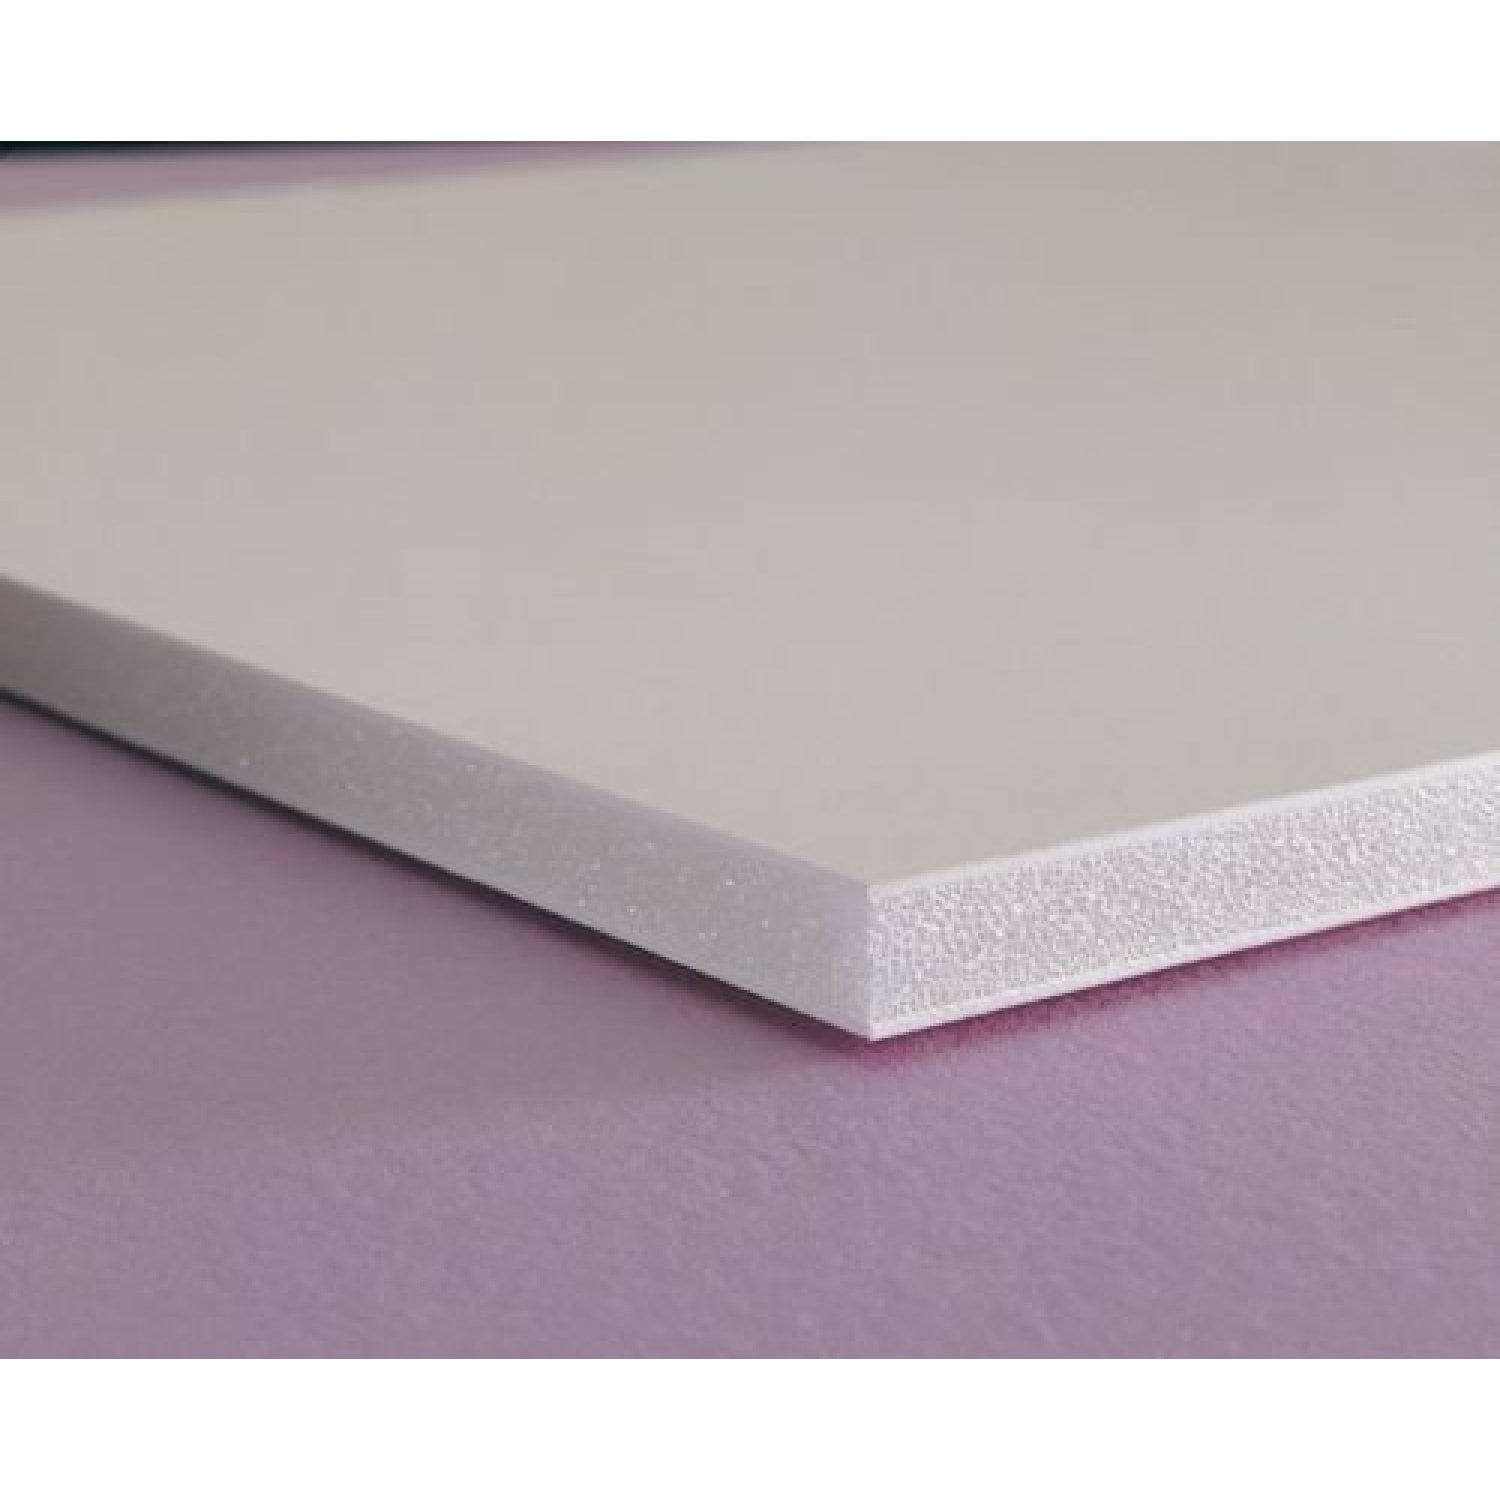 Foam Project Board, White 36x 48 (10/unit), #30048 –